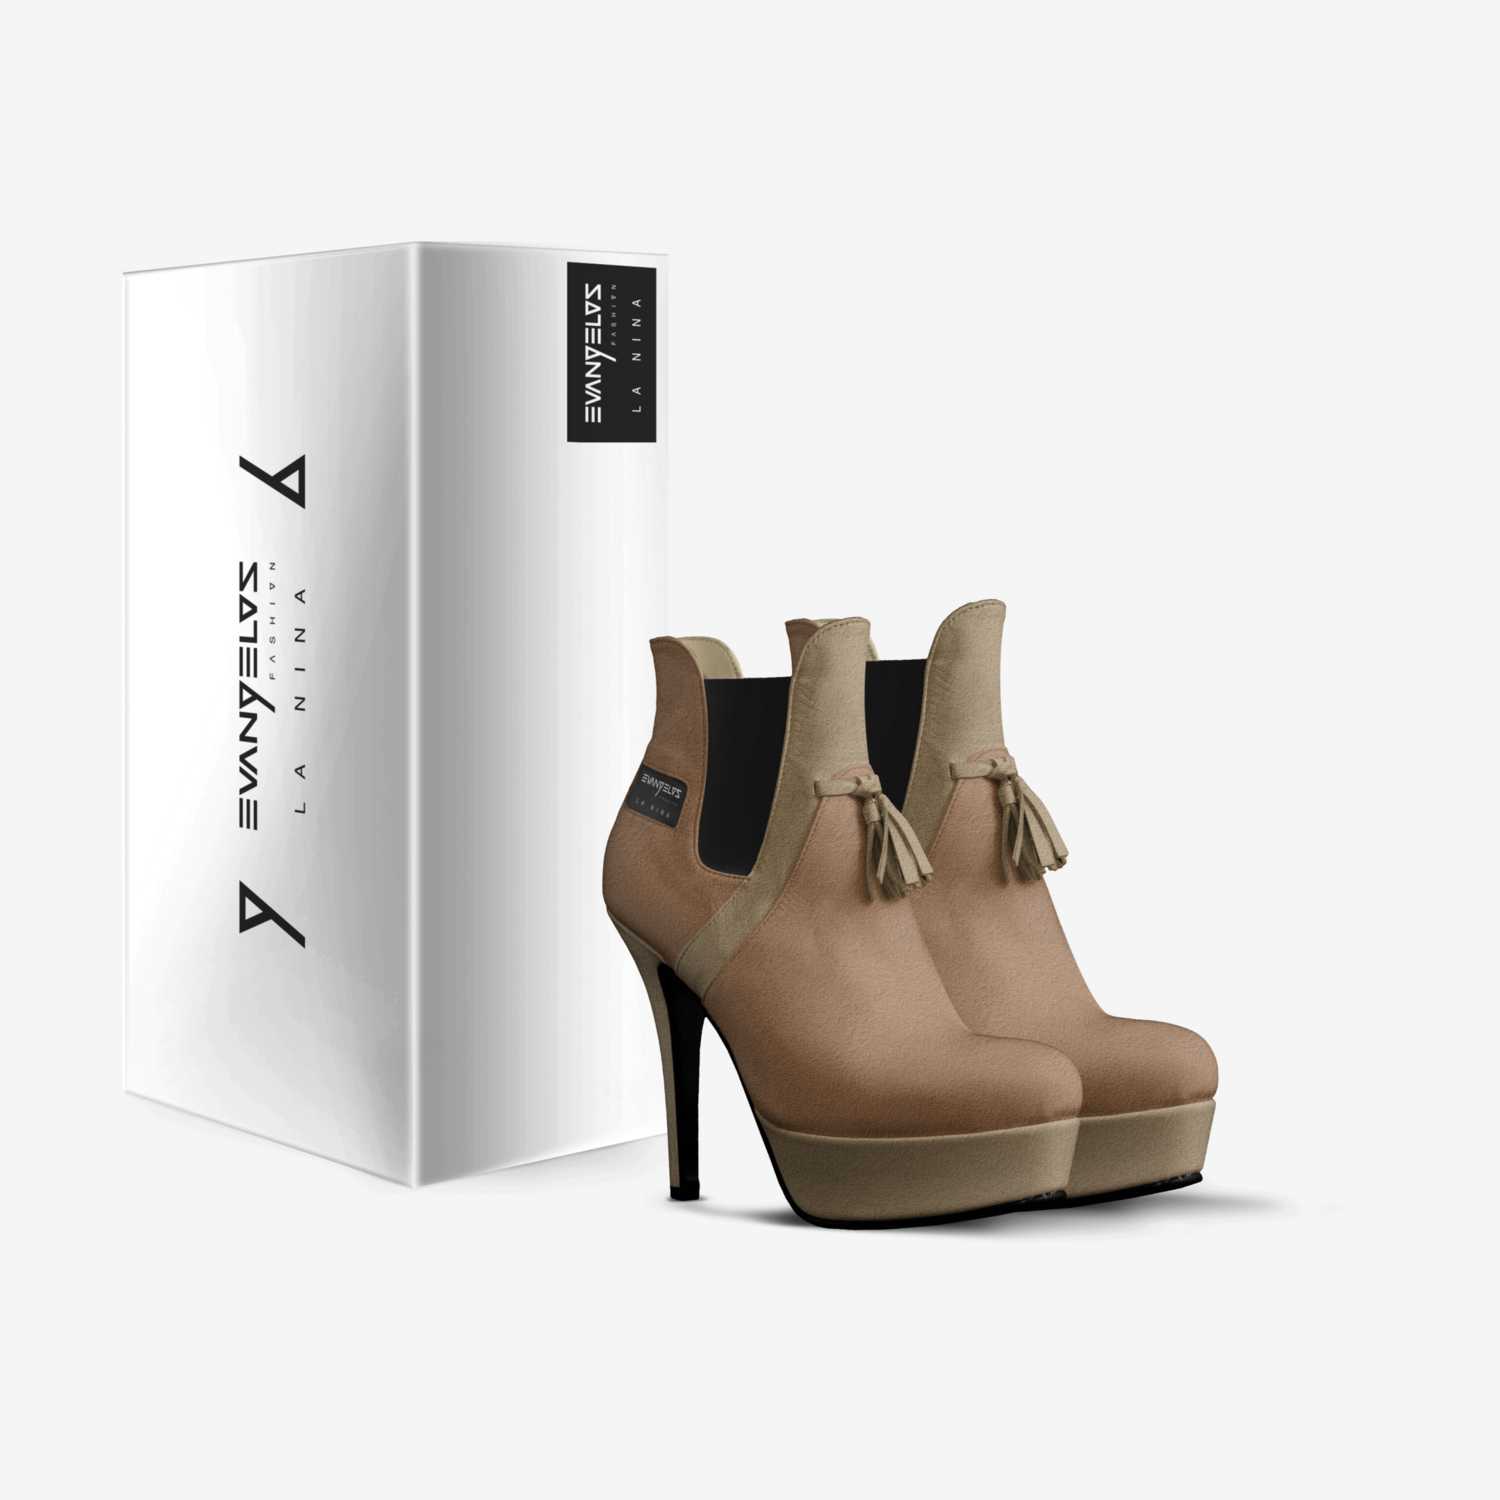 LA NINA custom made in Italy shoes by Evangelos Fashion | Box view